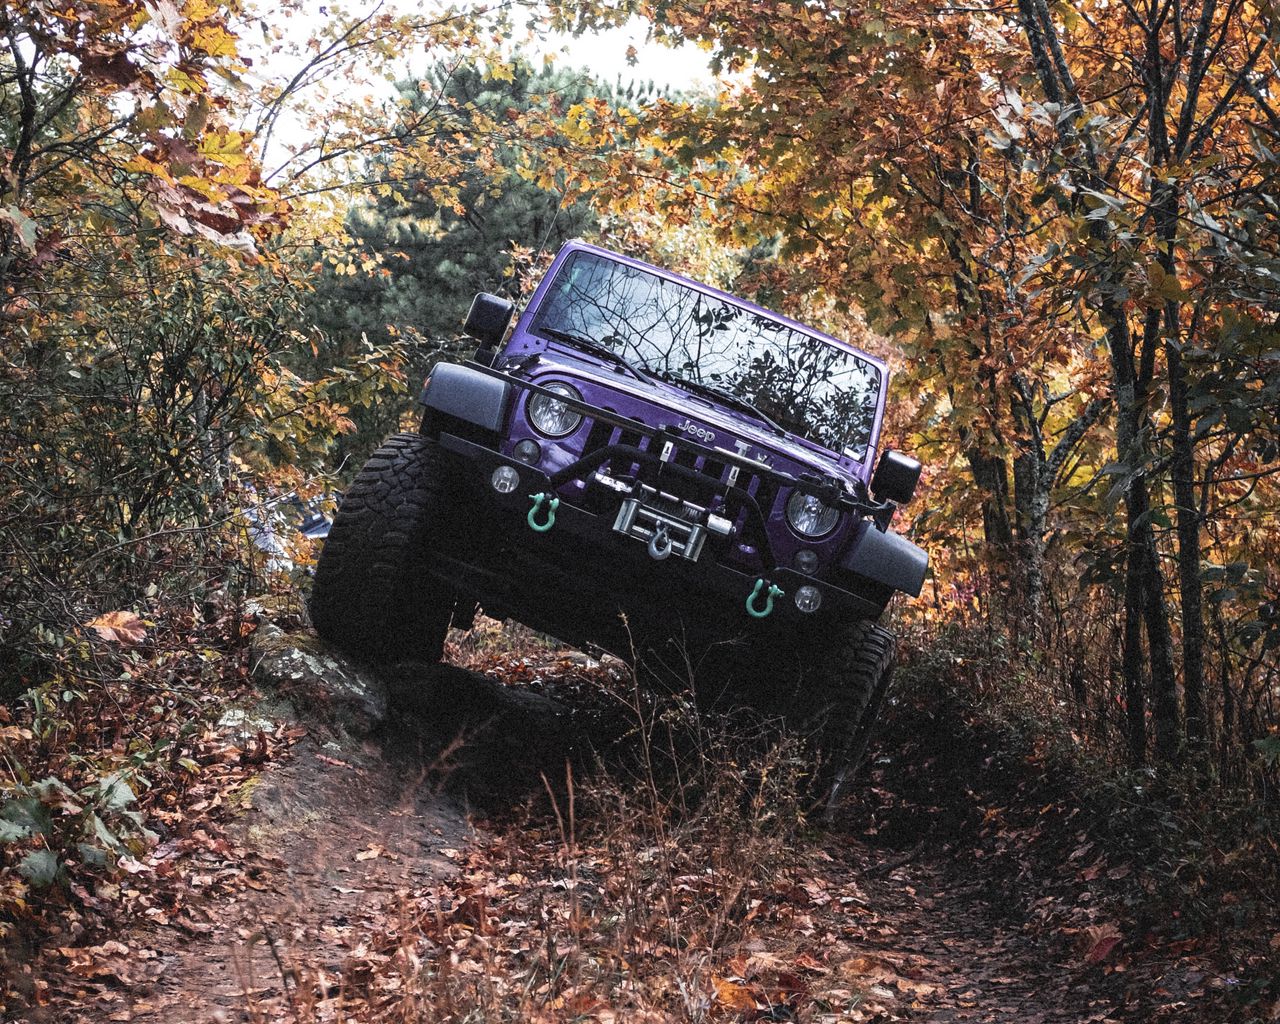 Download wallpaper 1280x1024 jeep wrangler jeep car suv purple